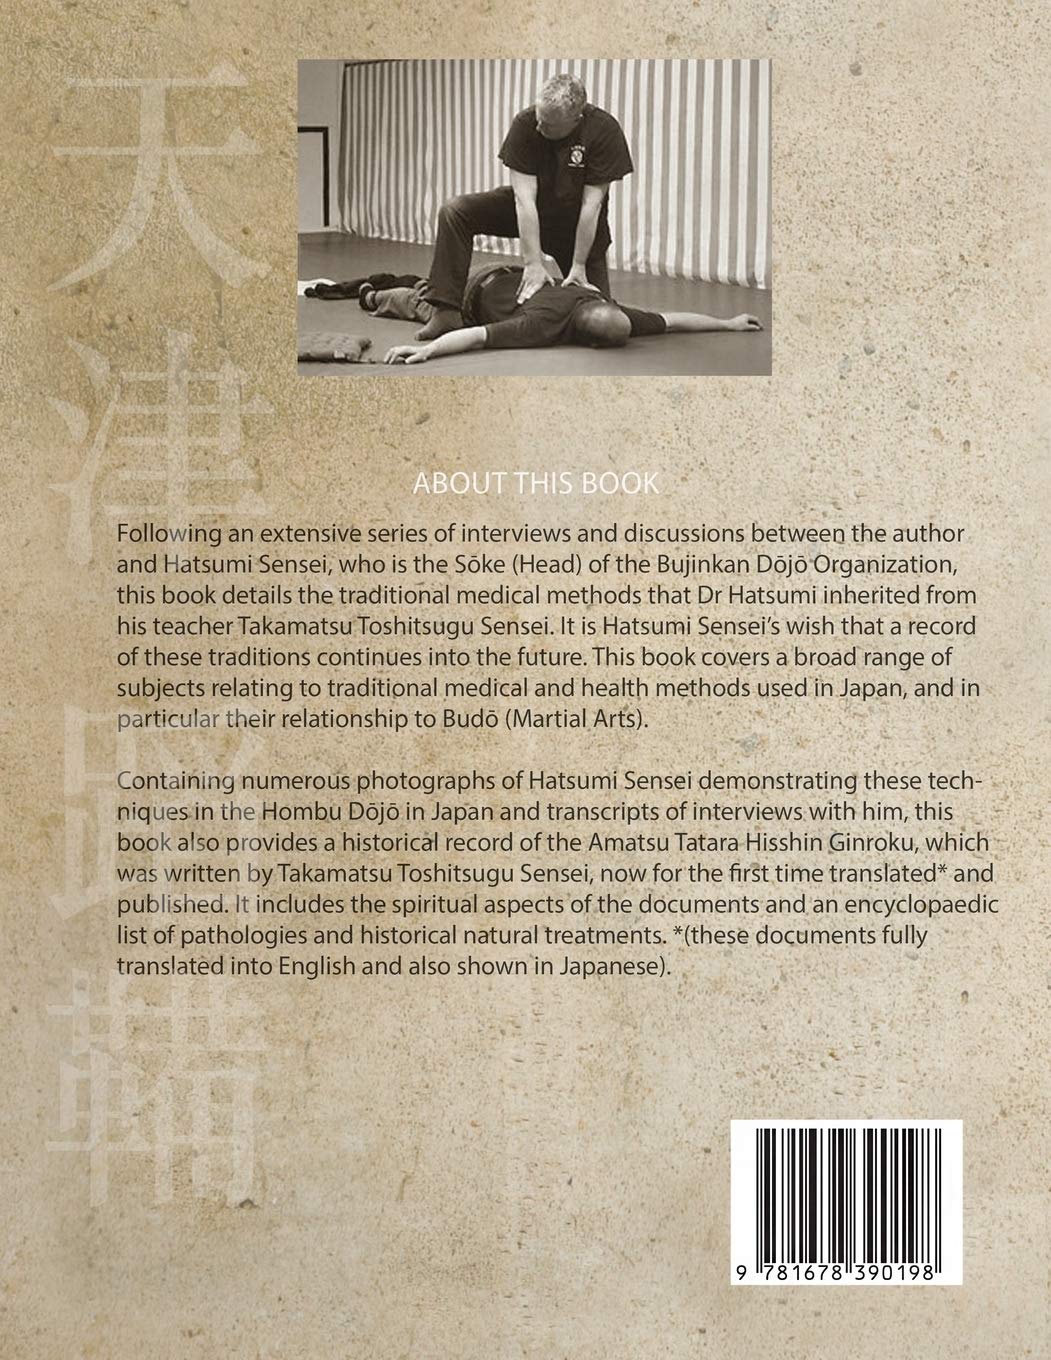 Life Secrets of the Amatsu Tatara: Documents of Takamatsu Toshitsugu, Interviews with Hatsumi Masaaki Book by Peter King - Budovideos